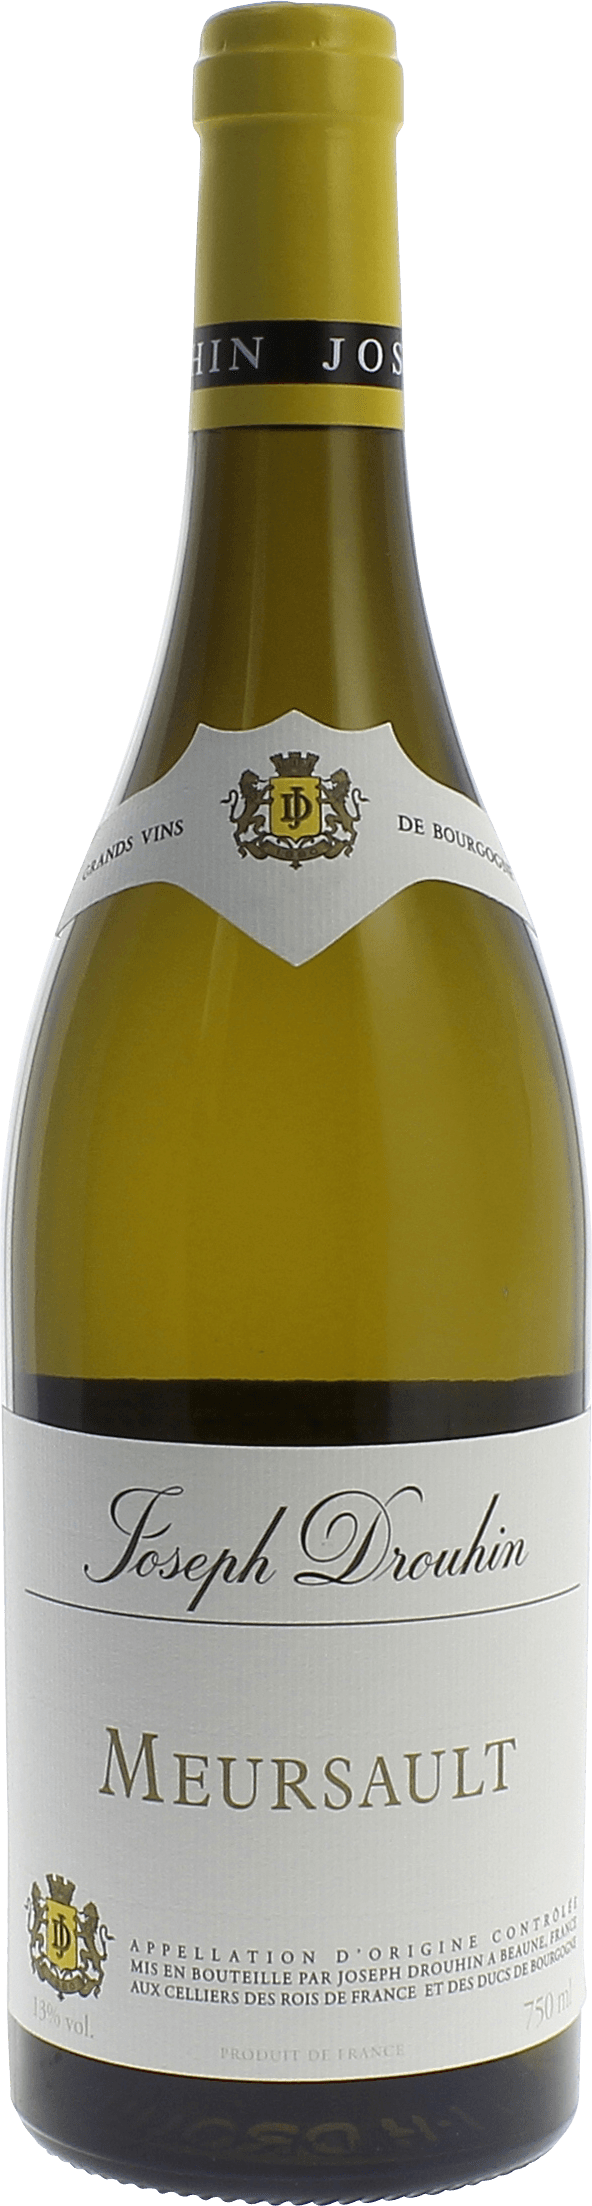 Meursault 2017 Domaine Joseph DROUHIN, Bourgogne blanc